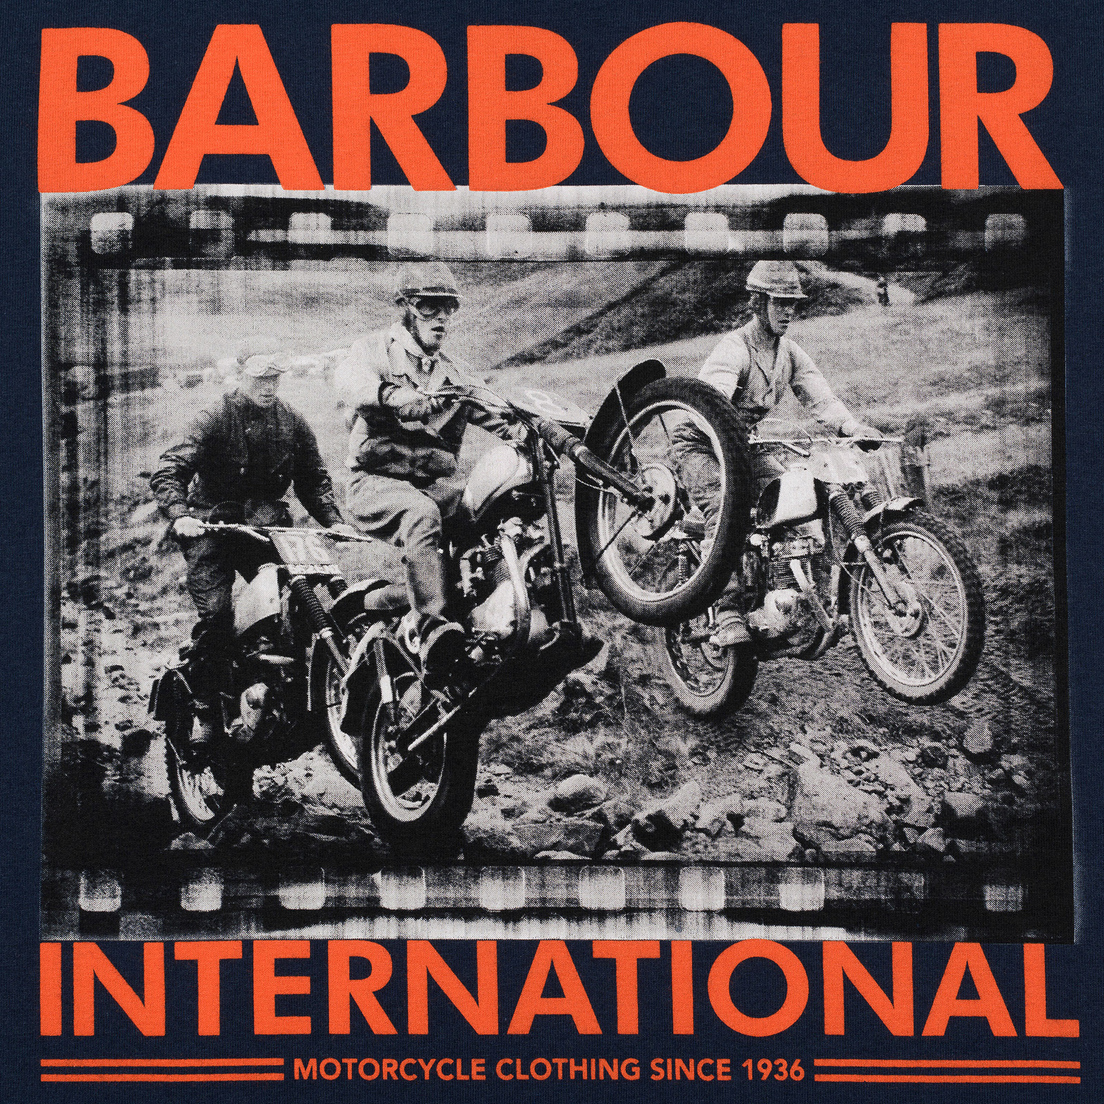 Barbour Мужская футболка International Archive Biker